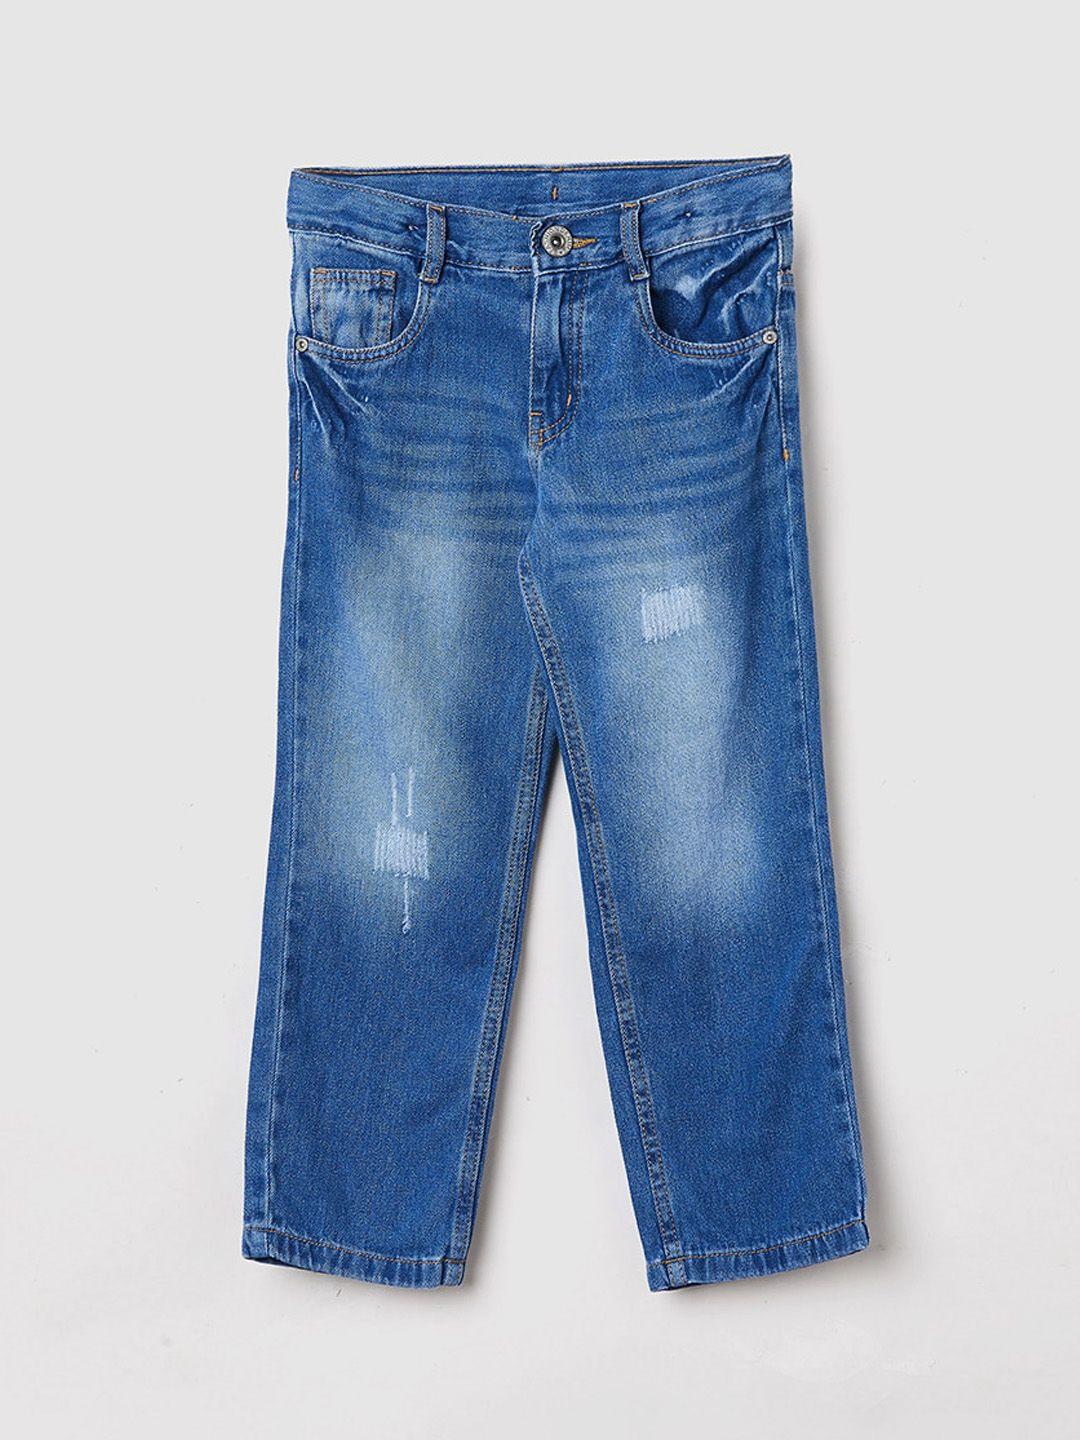 max Boys Low Distress Heavy Fade Pure Cotton Jeans